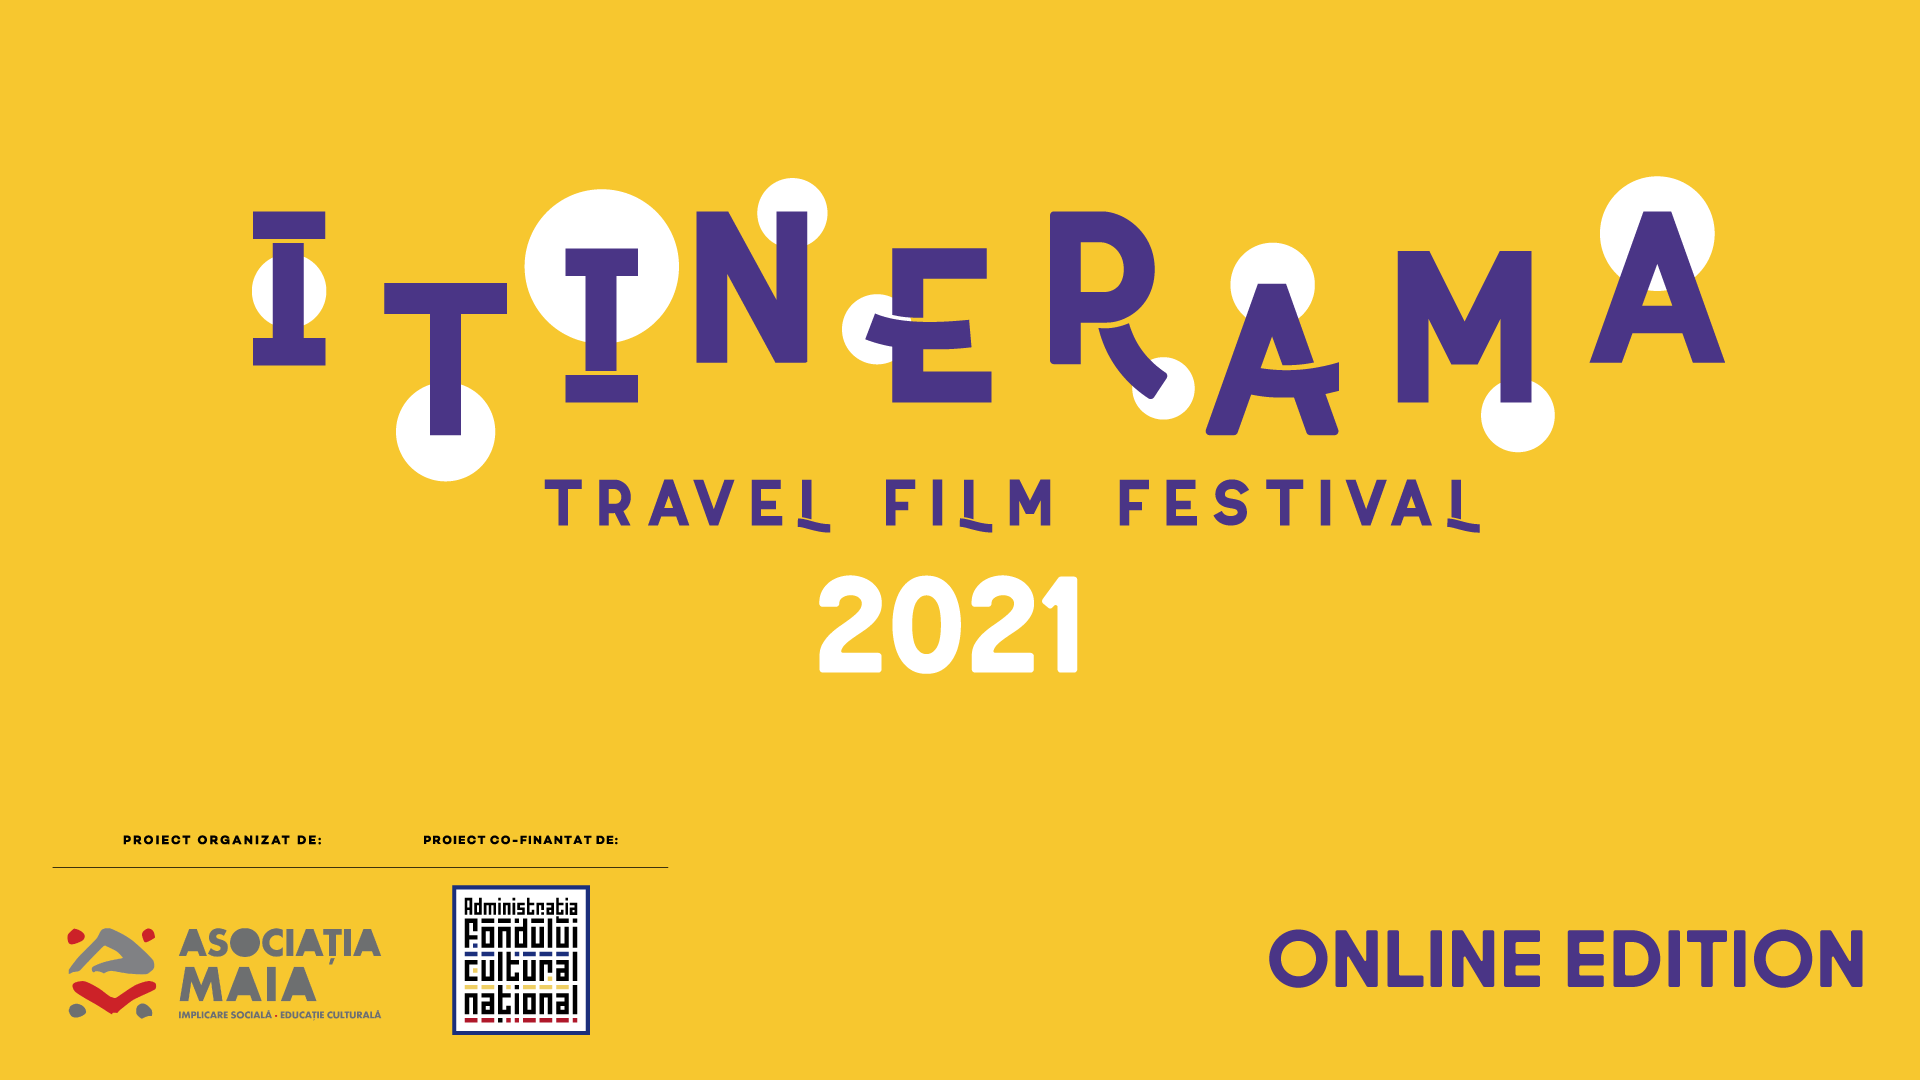 ITINERAMA TRAVEL FILM FESTIVAL 2021 - ONLINE EDITION